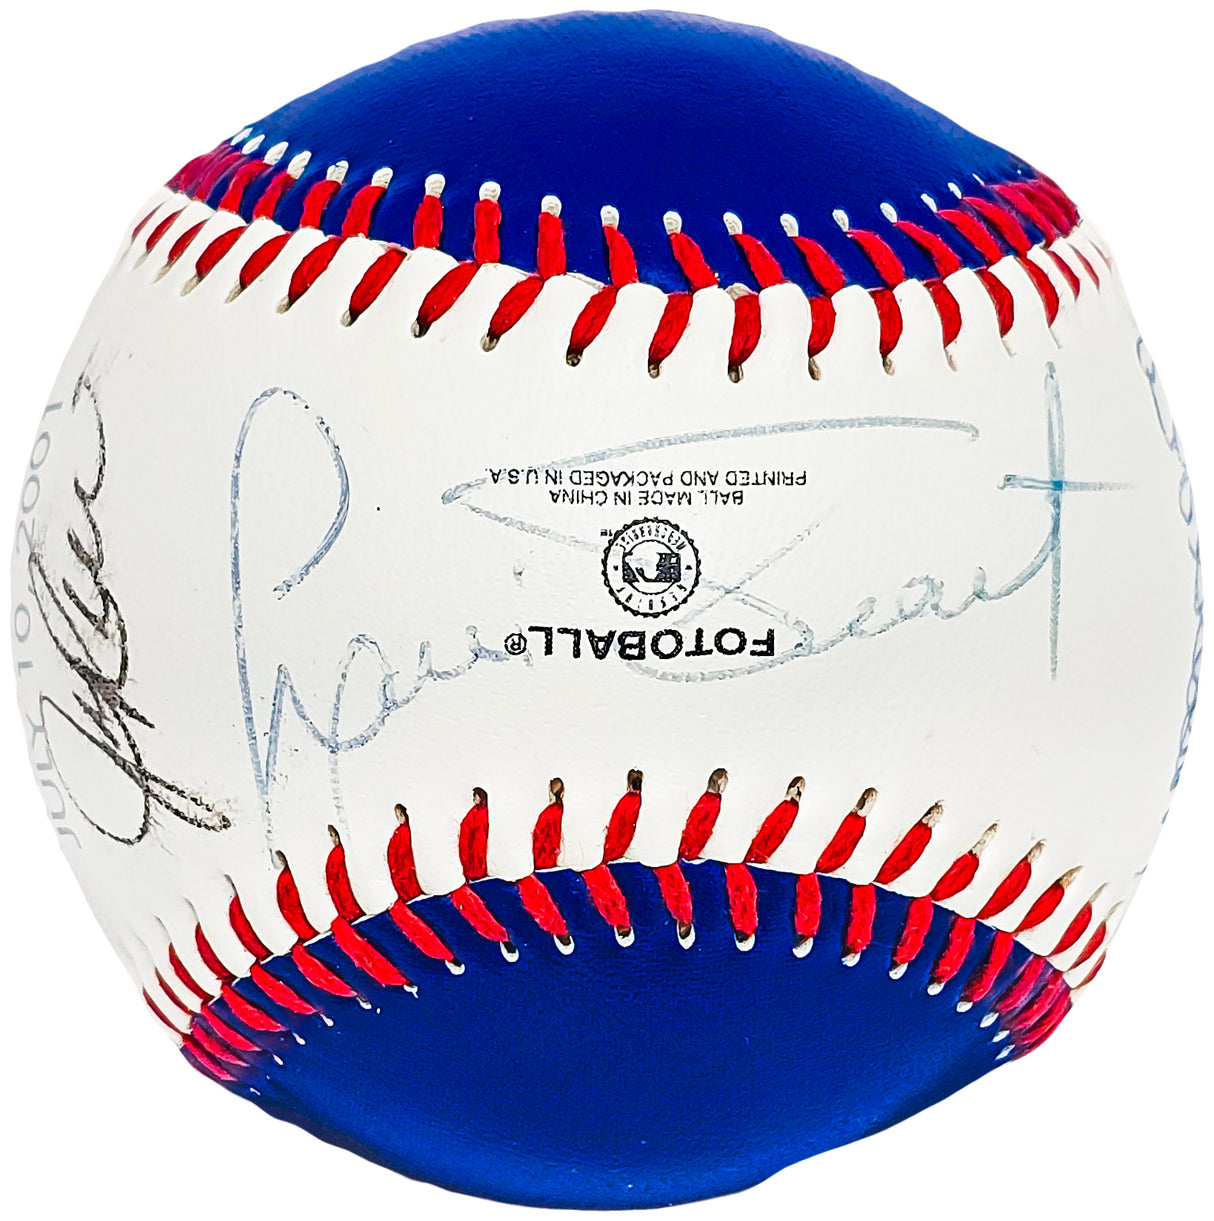 Bob Gibson, Jim Rice & Luis Tiant Autographed Official Safeco Field Fotoball Baseball SKU #218466